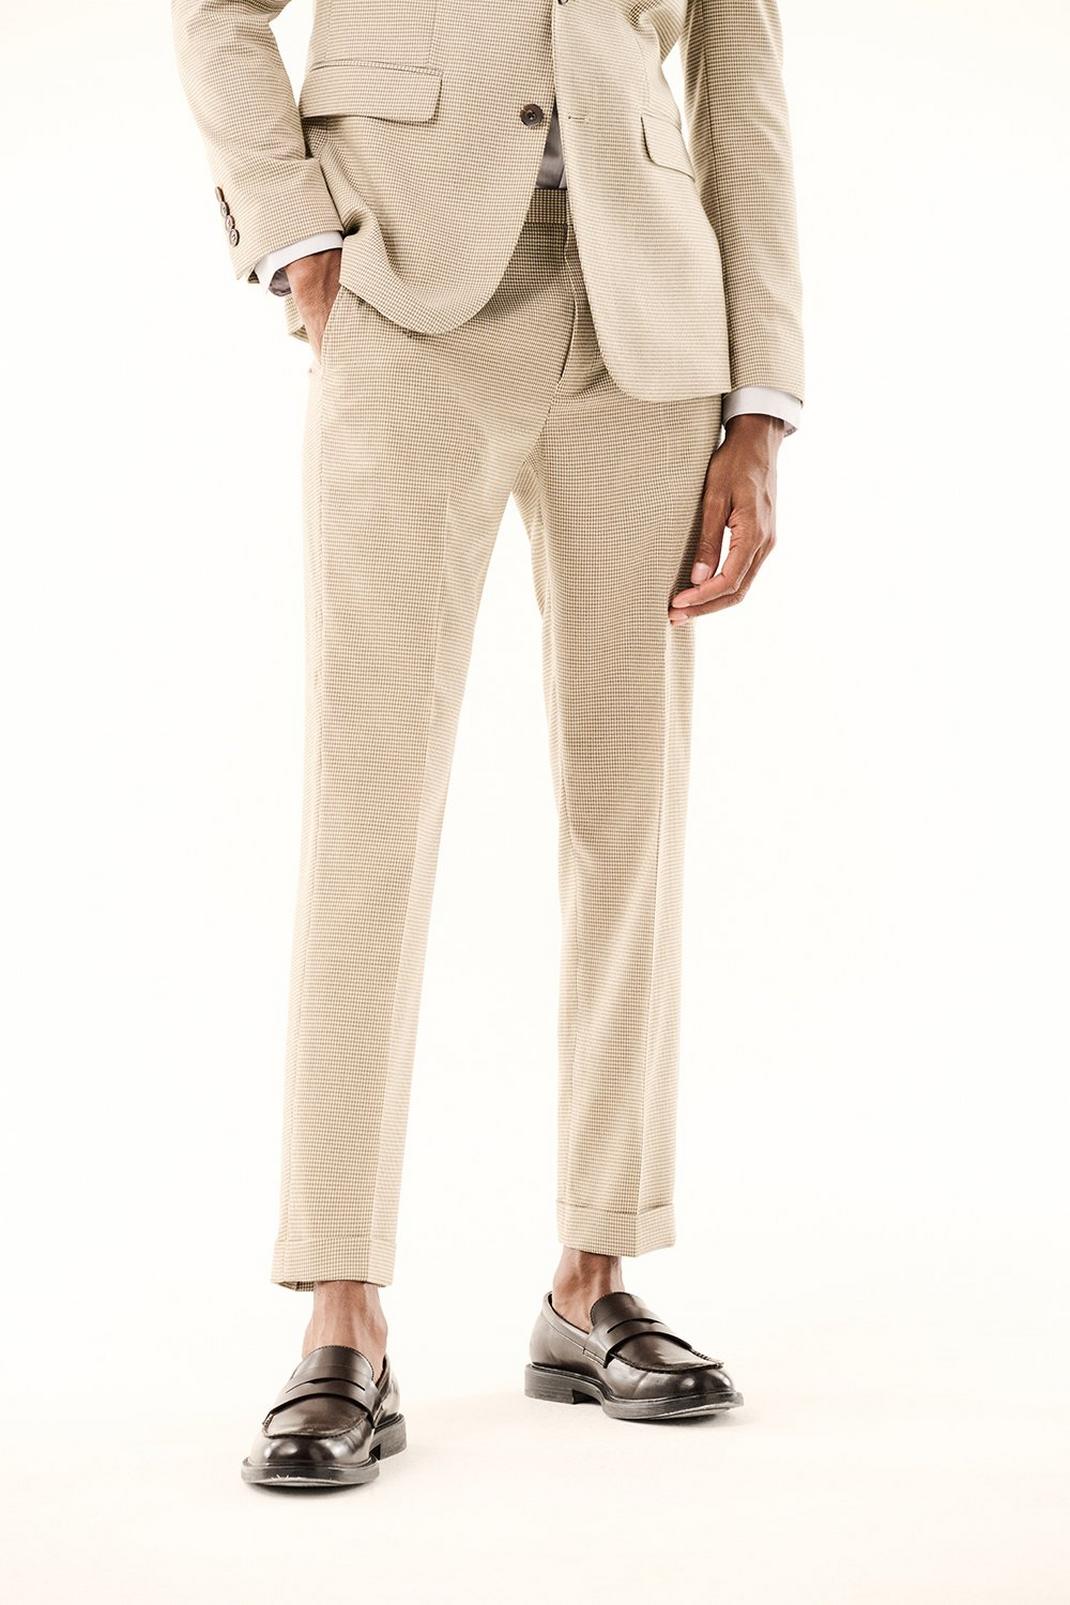 Zara Chino trouser discount 67% White 40                  EU slim WOMEN FASHION Trousers Chino trouser Skinny 